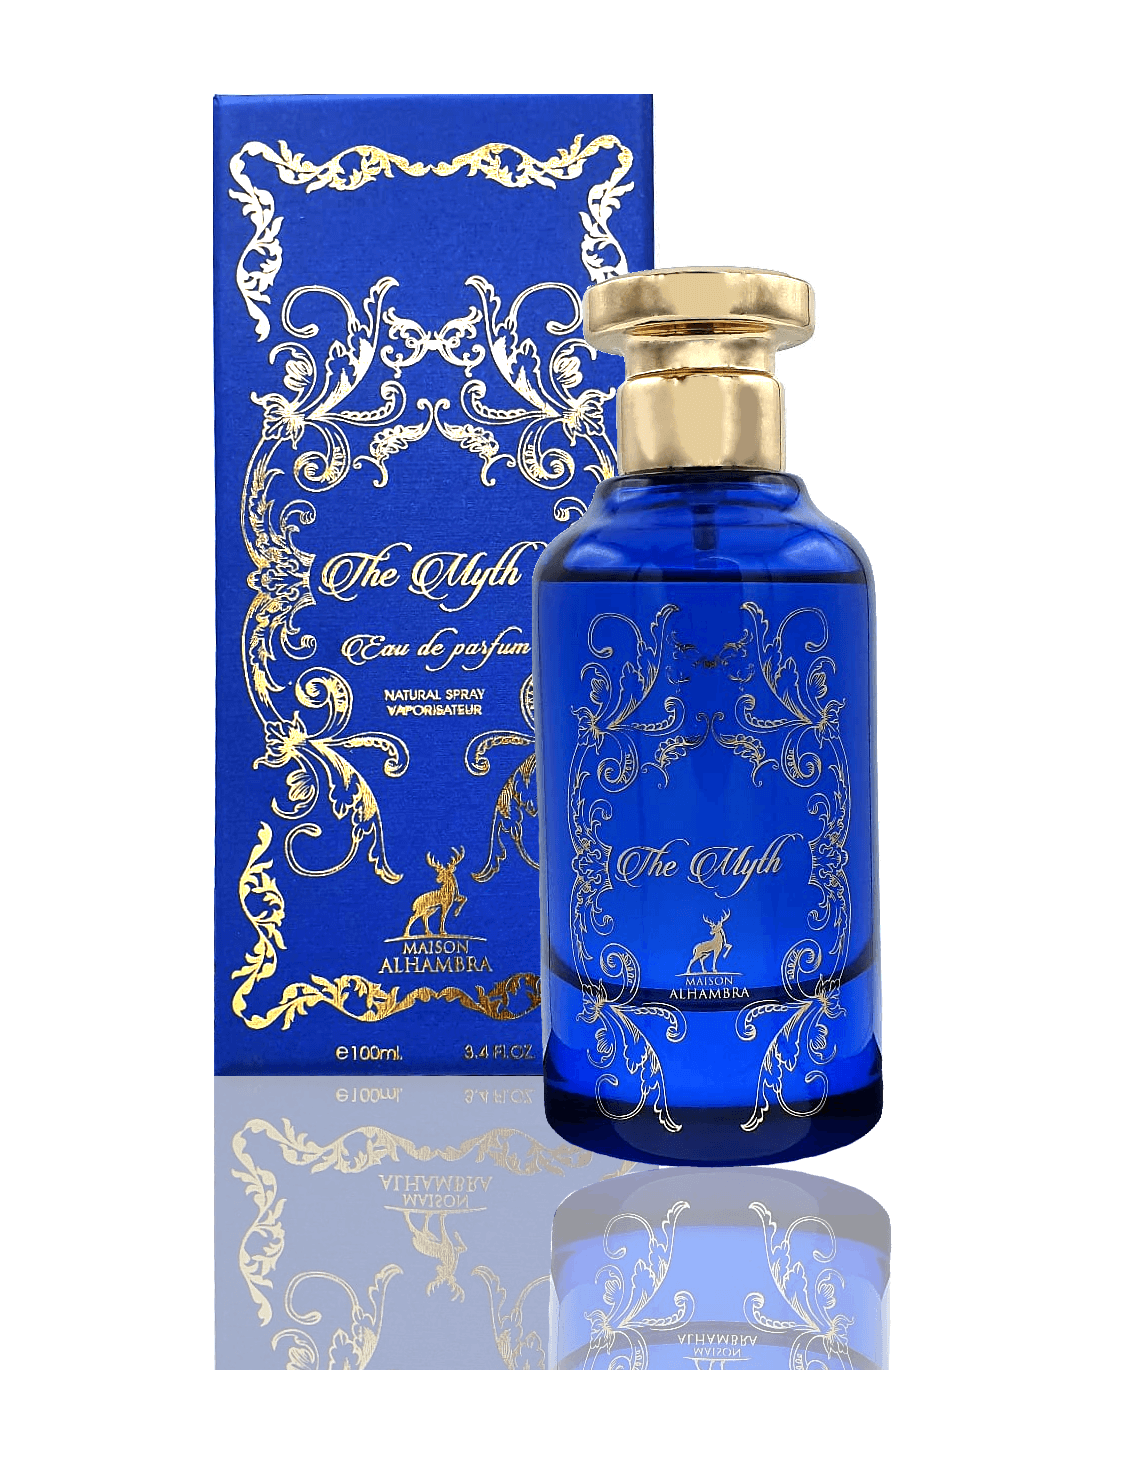 Pride Perfume by Maison Alhambra